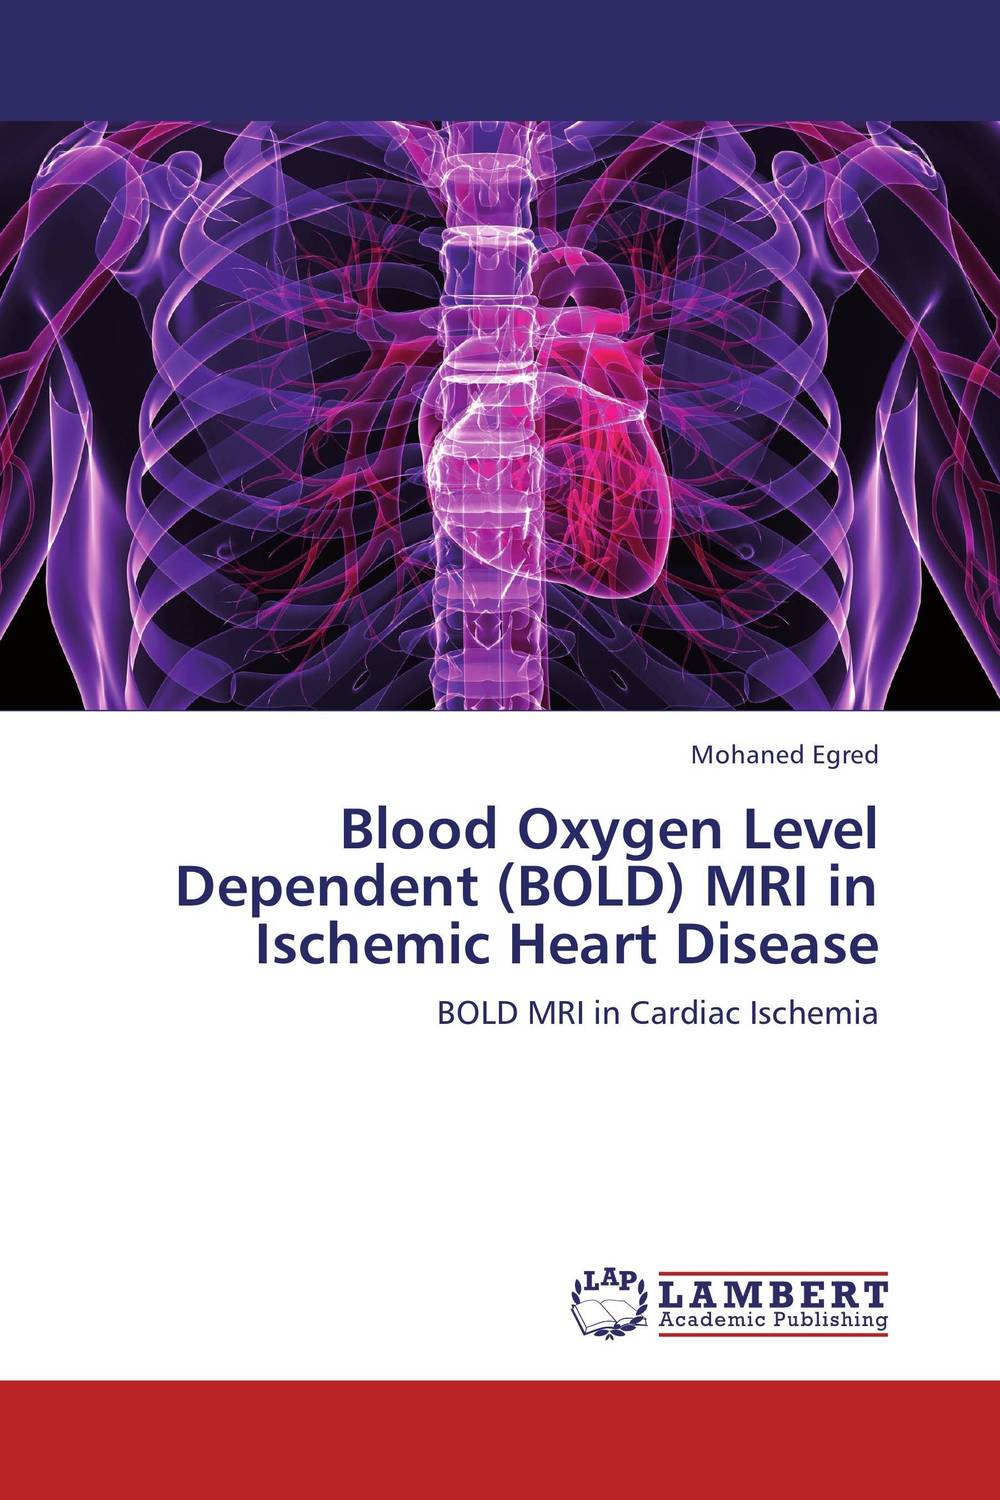 Blood Oxygen Level Dependent (BOLD) MRI in Ischemic Heart Disease